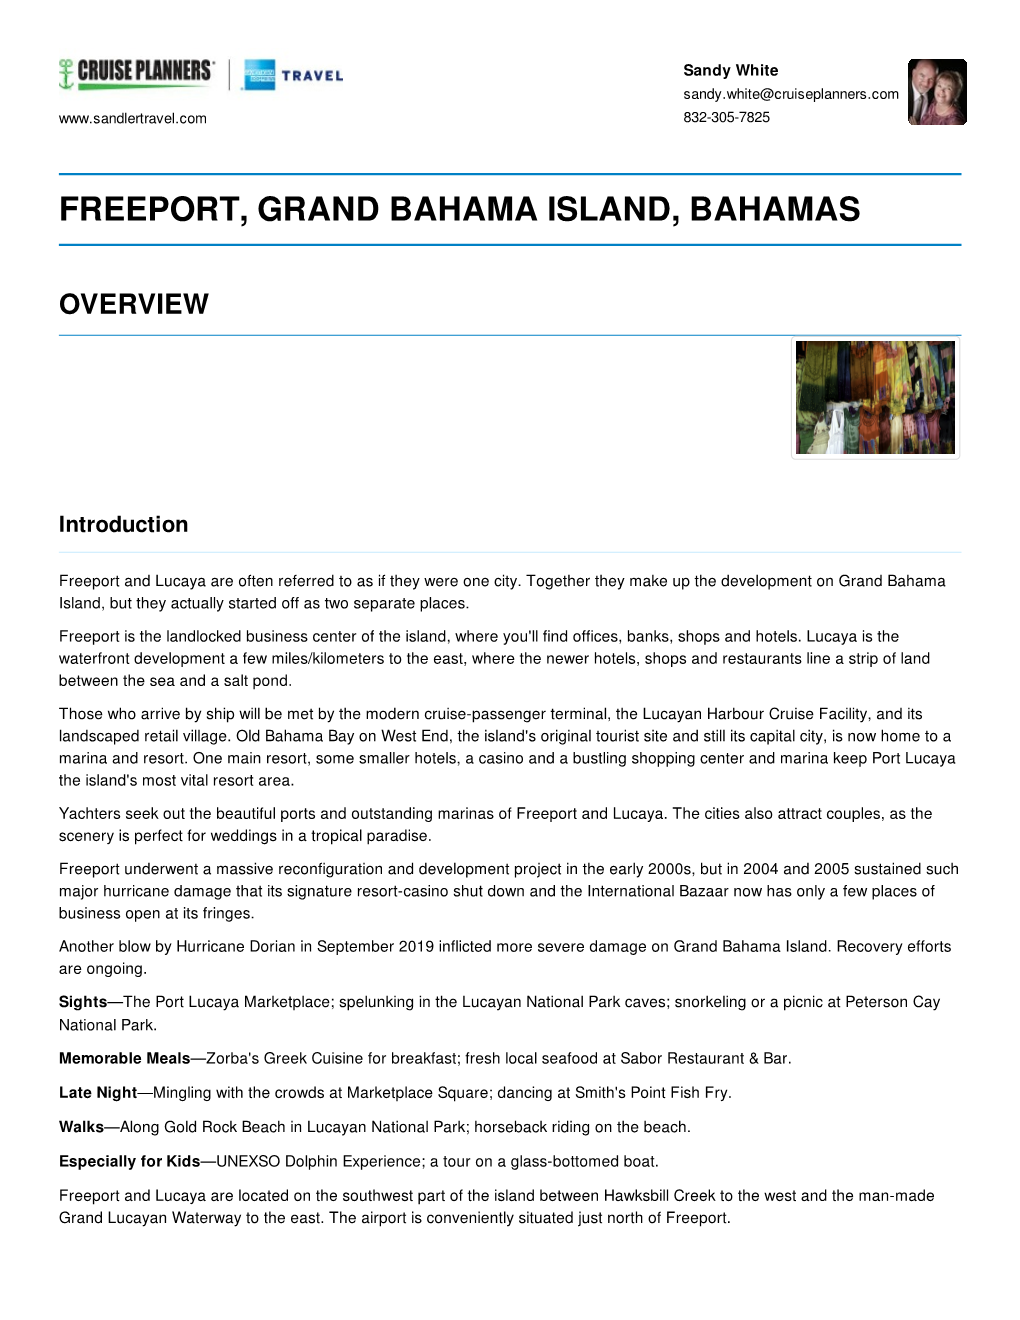 Freeport, Grand Bahama Island, Bahamas Overview